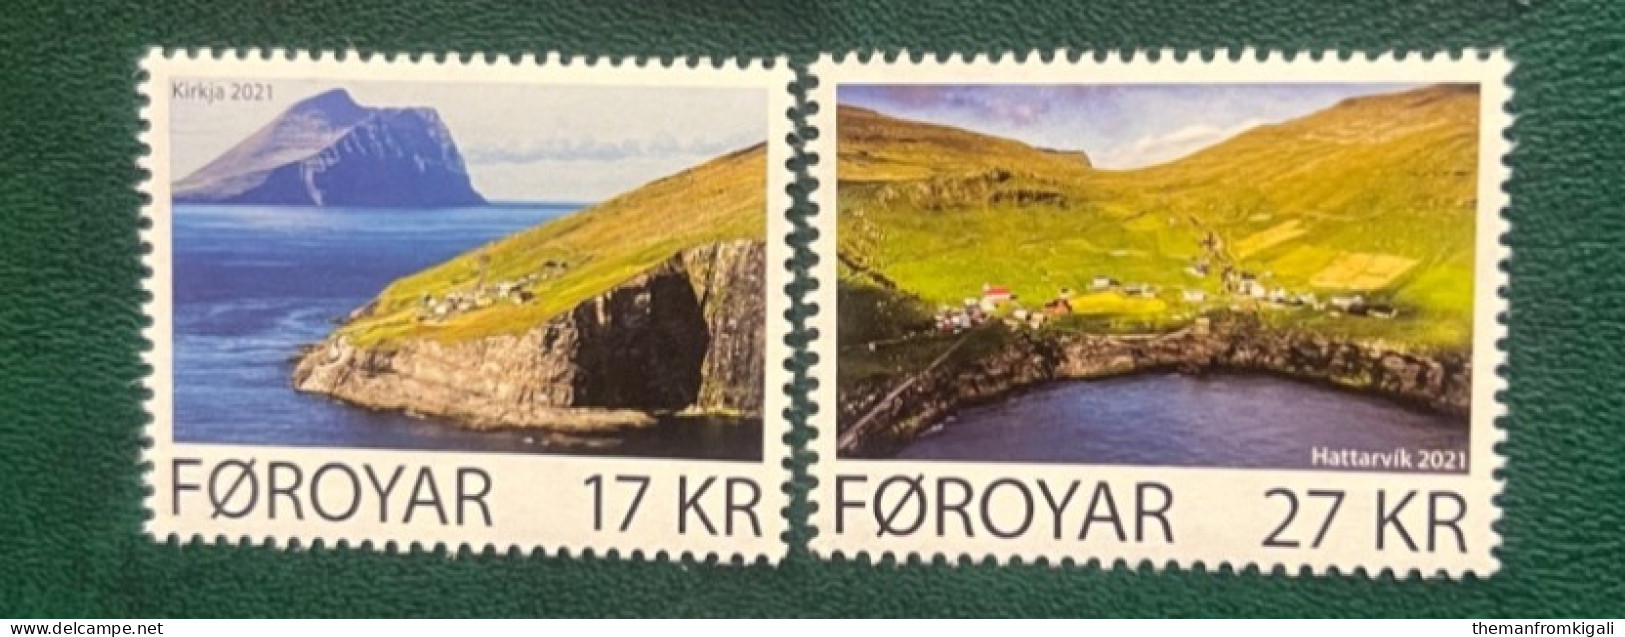 Faroe Islands 2021 Kirkja & Hattarvik - Faroe Islands